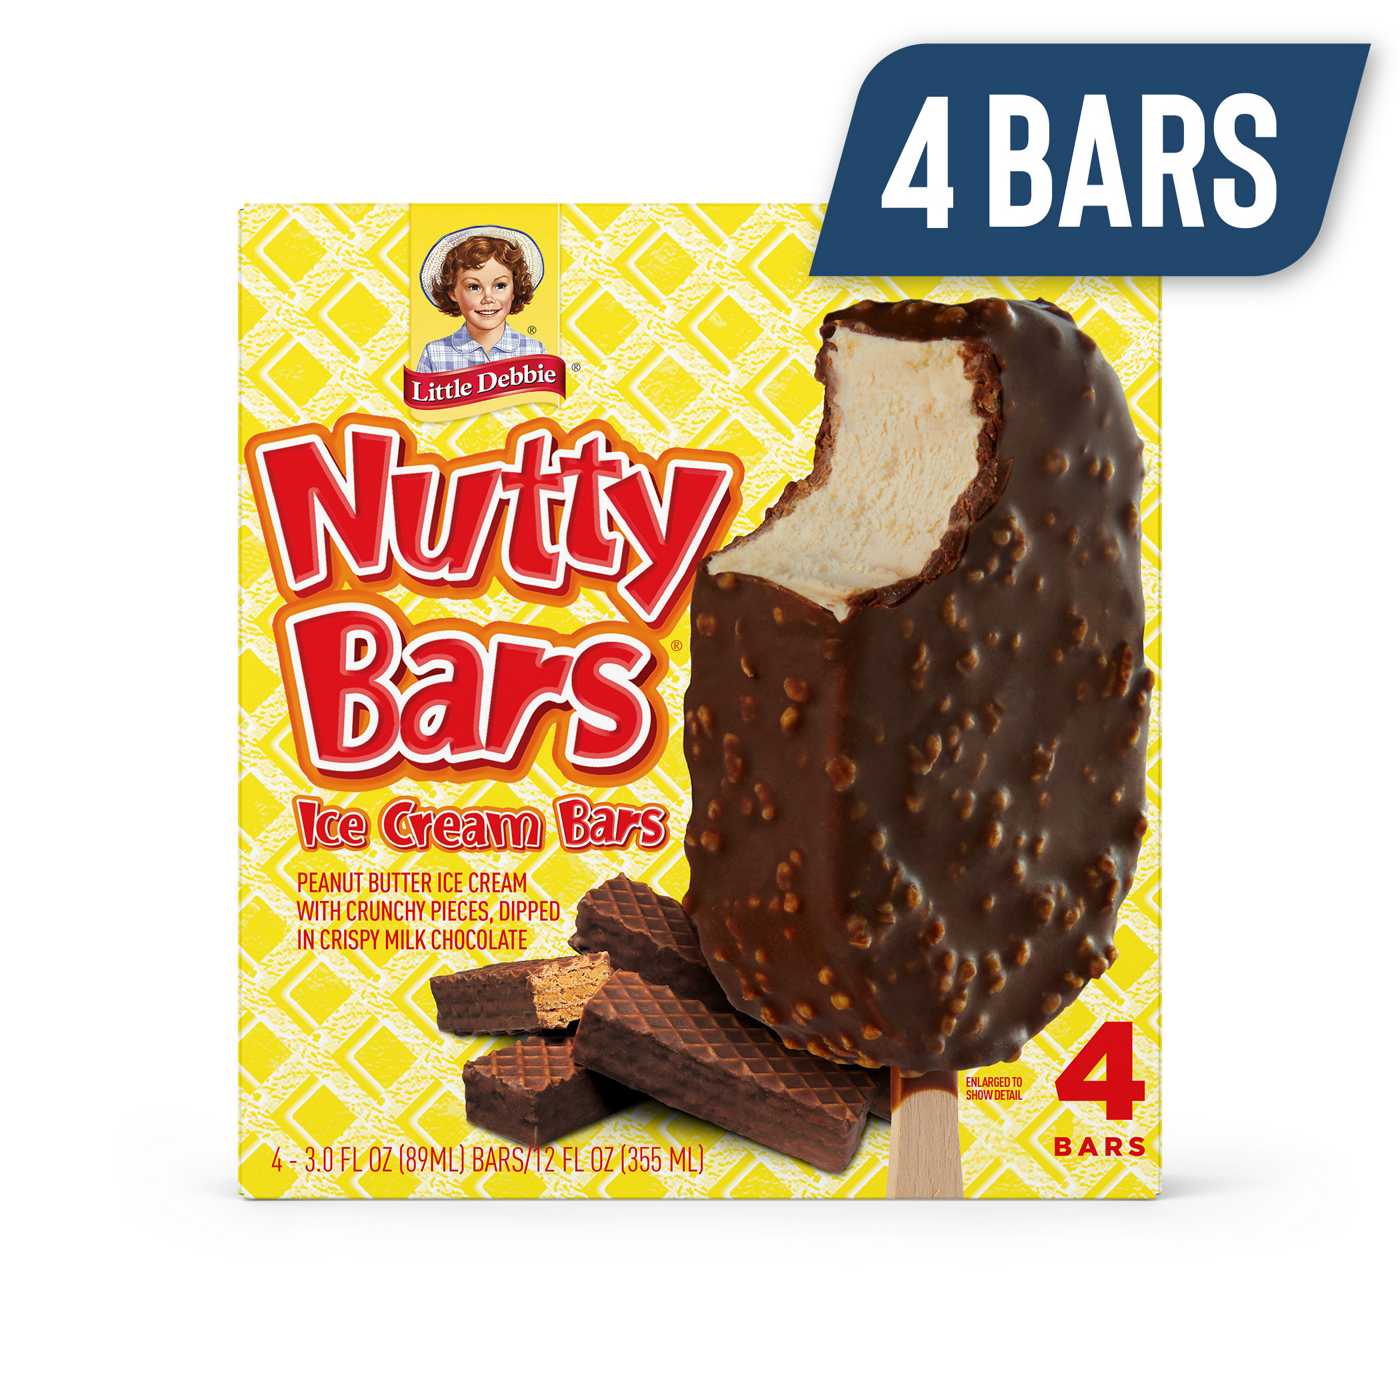 Little Debbie Nutty Bars Ice Cream Bars; image 1 of 3